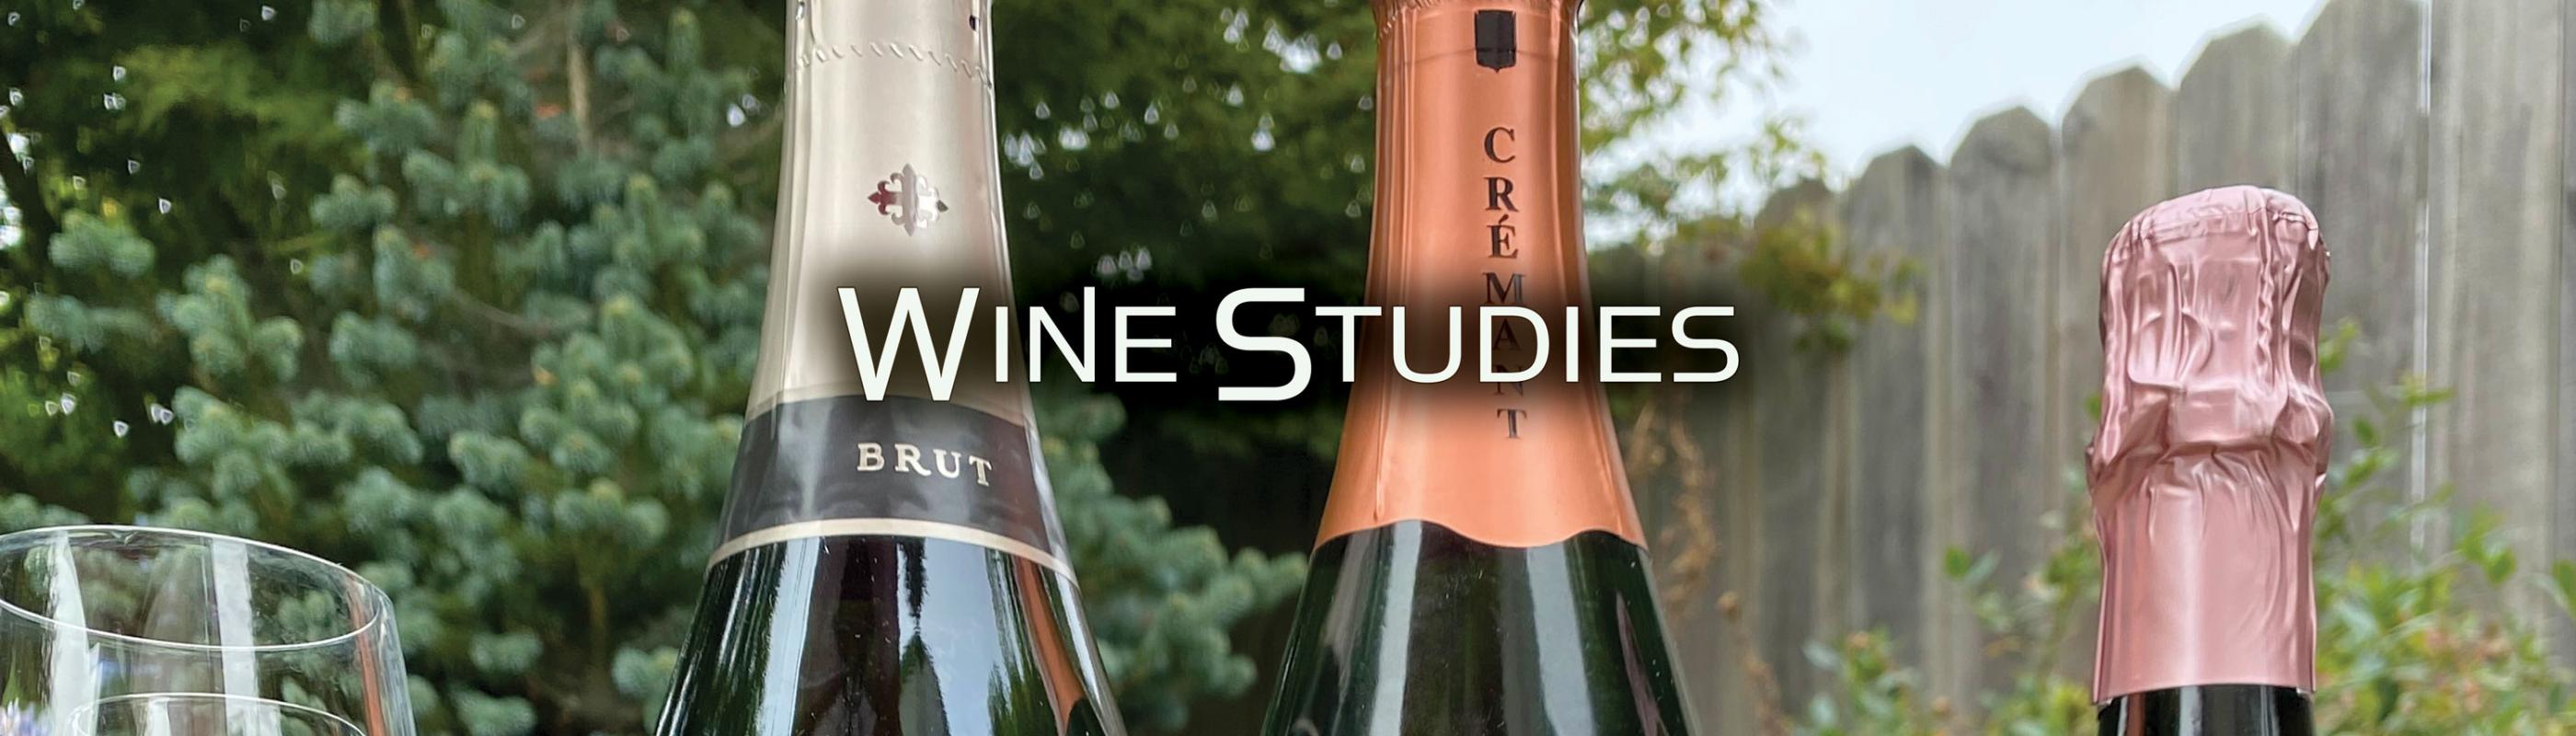 Wine Studies: Sparkling Wines